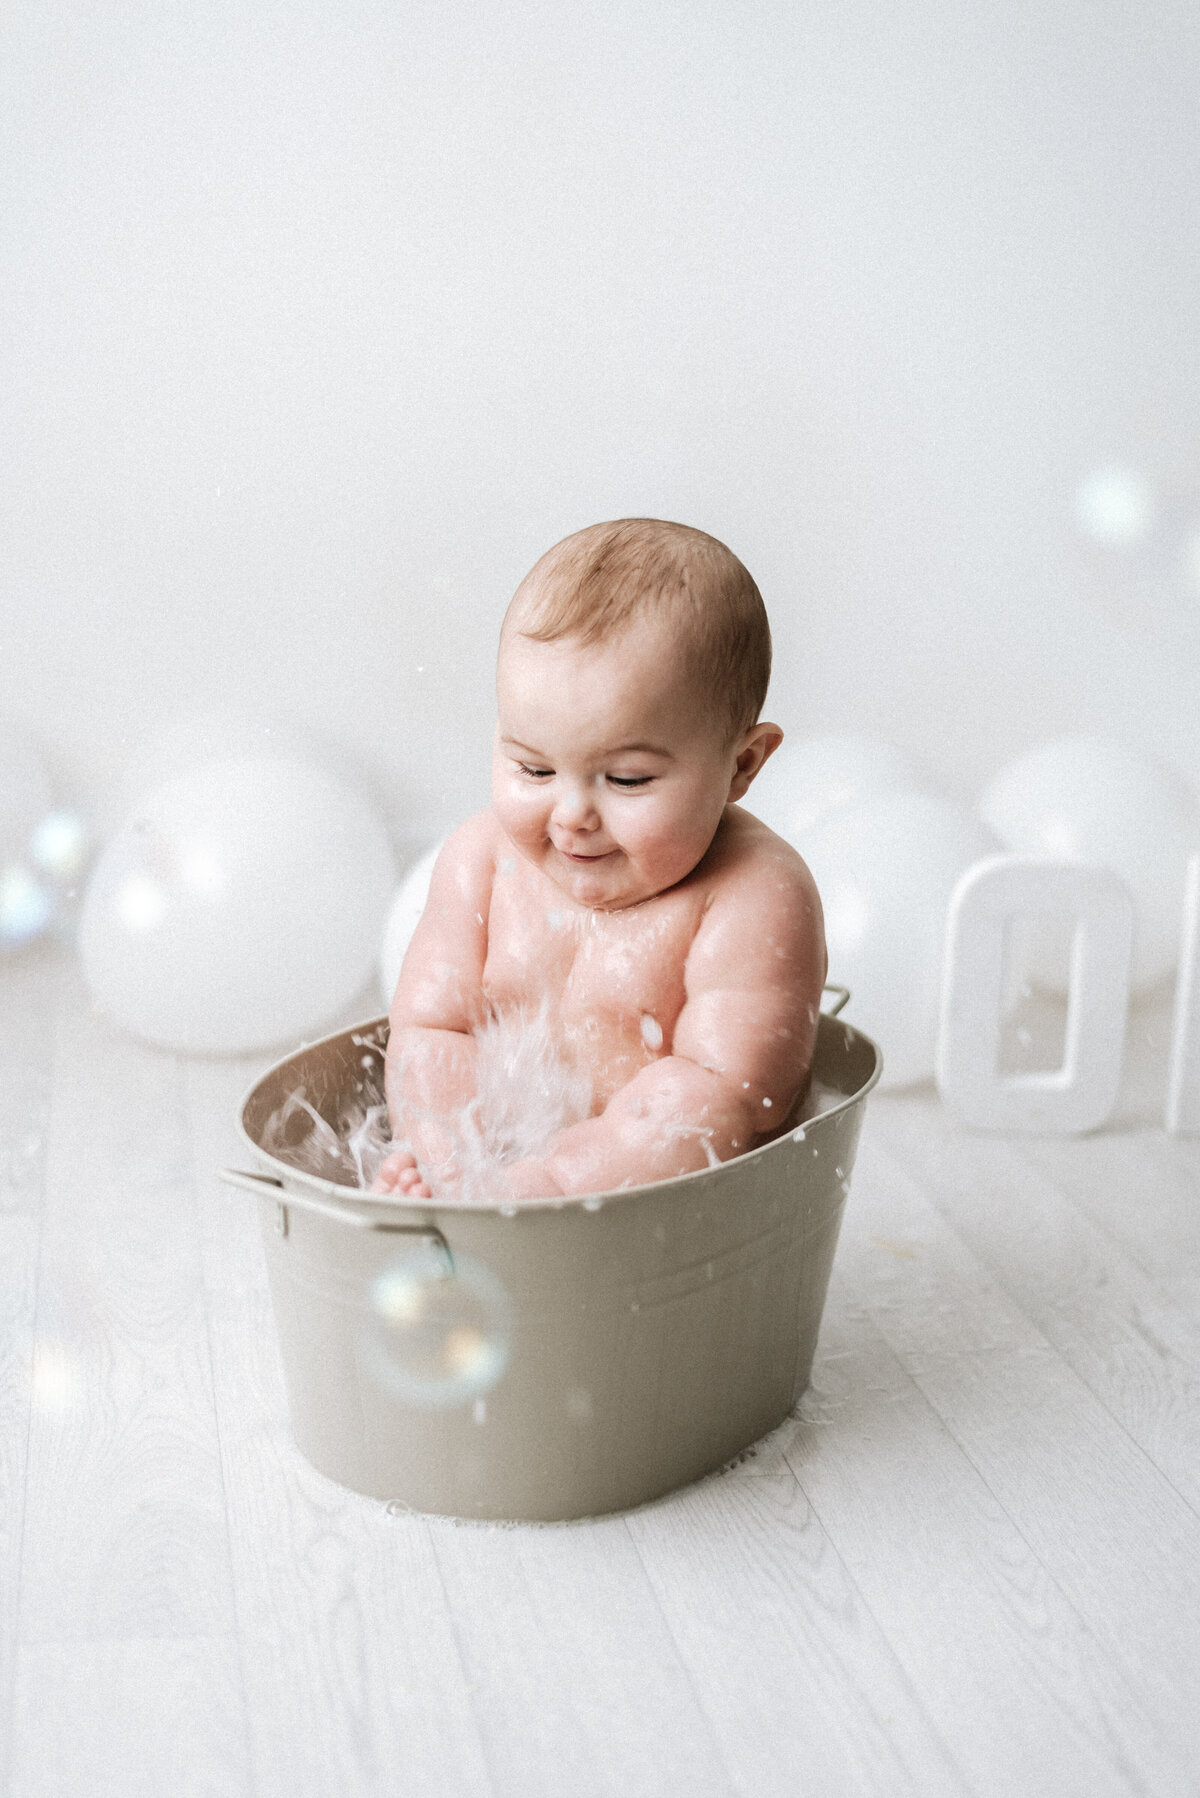 baby splashing water in a tub at first birthday photoshoot in billingshurst